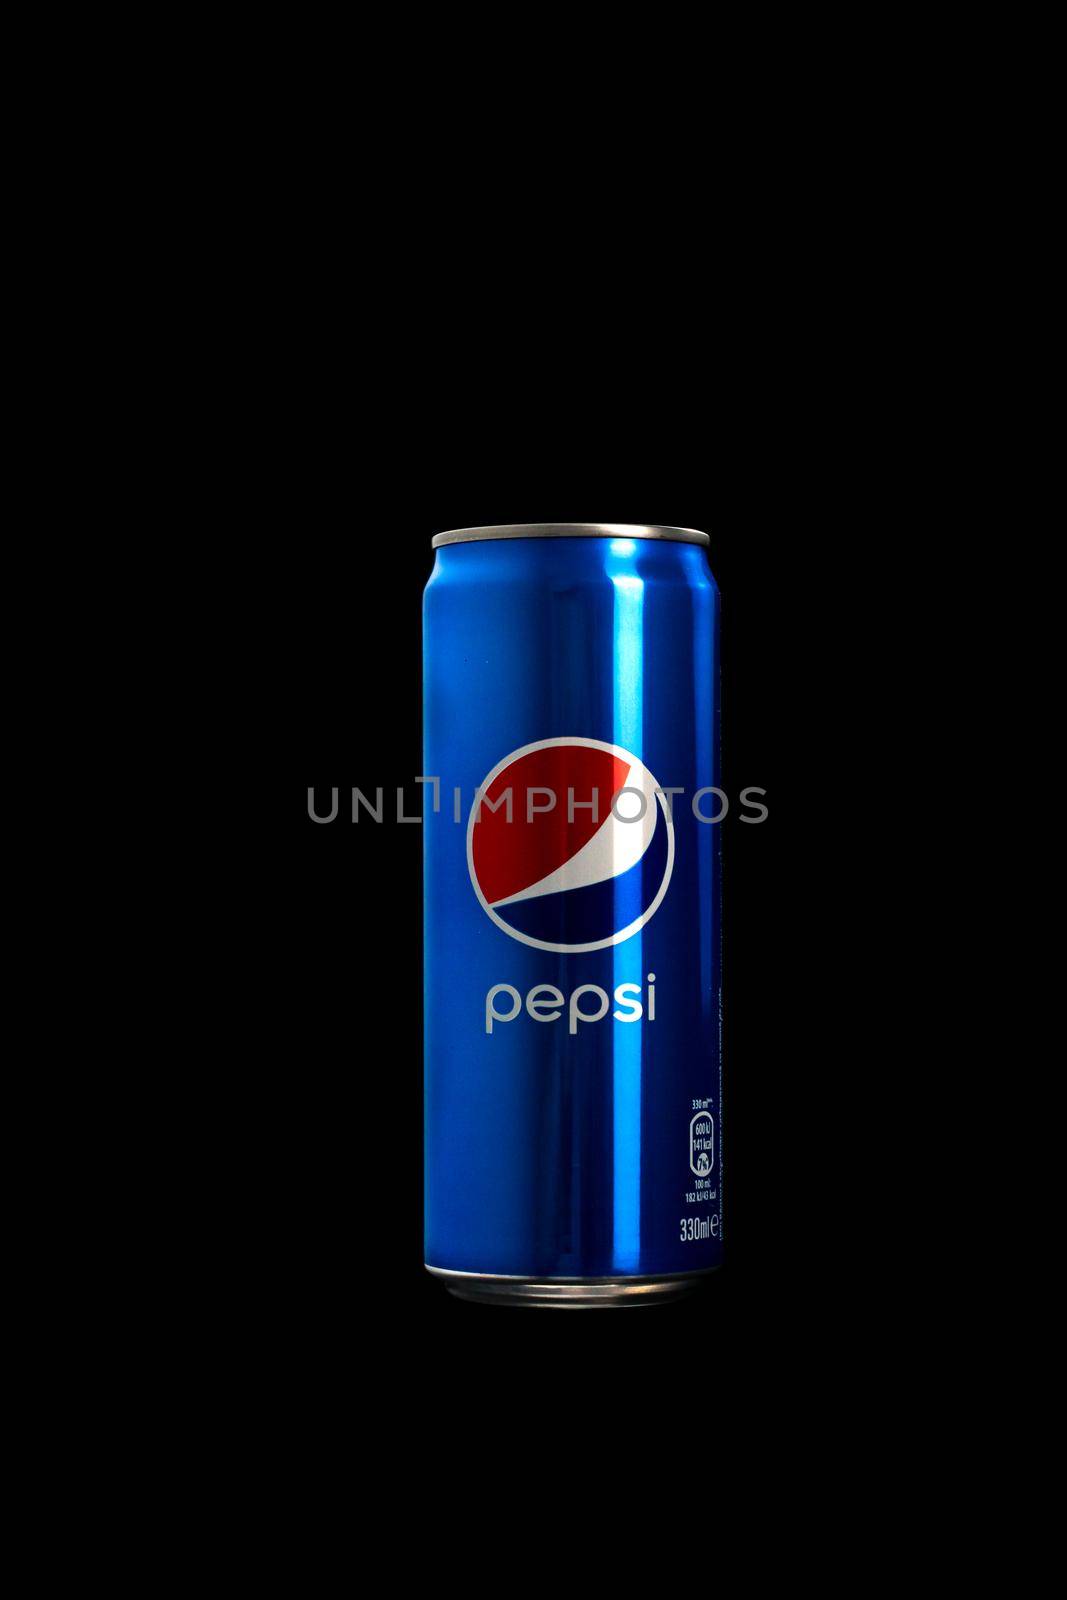 Editorial photo of classic Pepsi can on black background. Studio shot in Bucharest, Romania, 2021